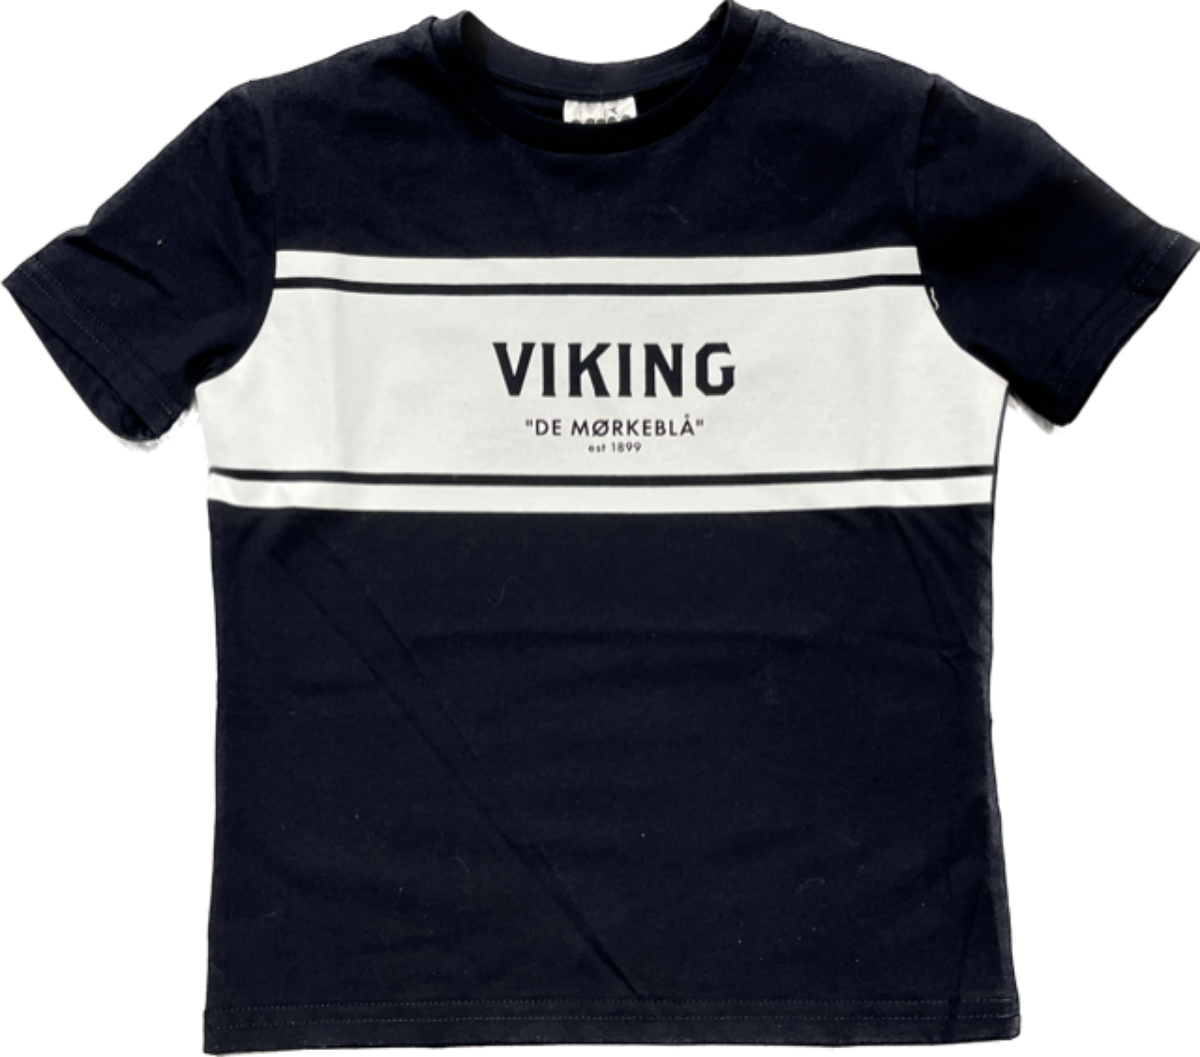 diadora-viking-t-skjorte-mørkeblåe-jr-marine